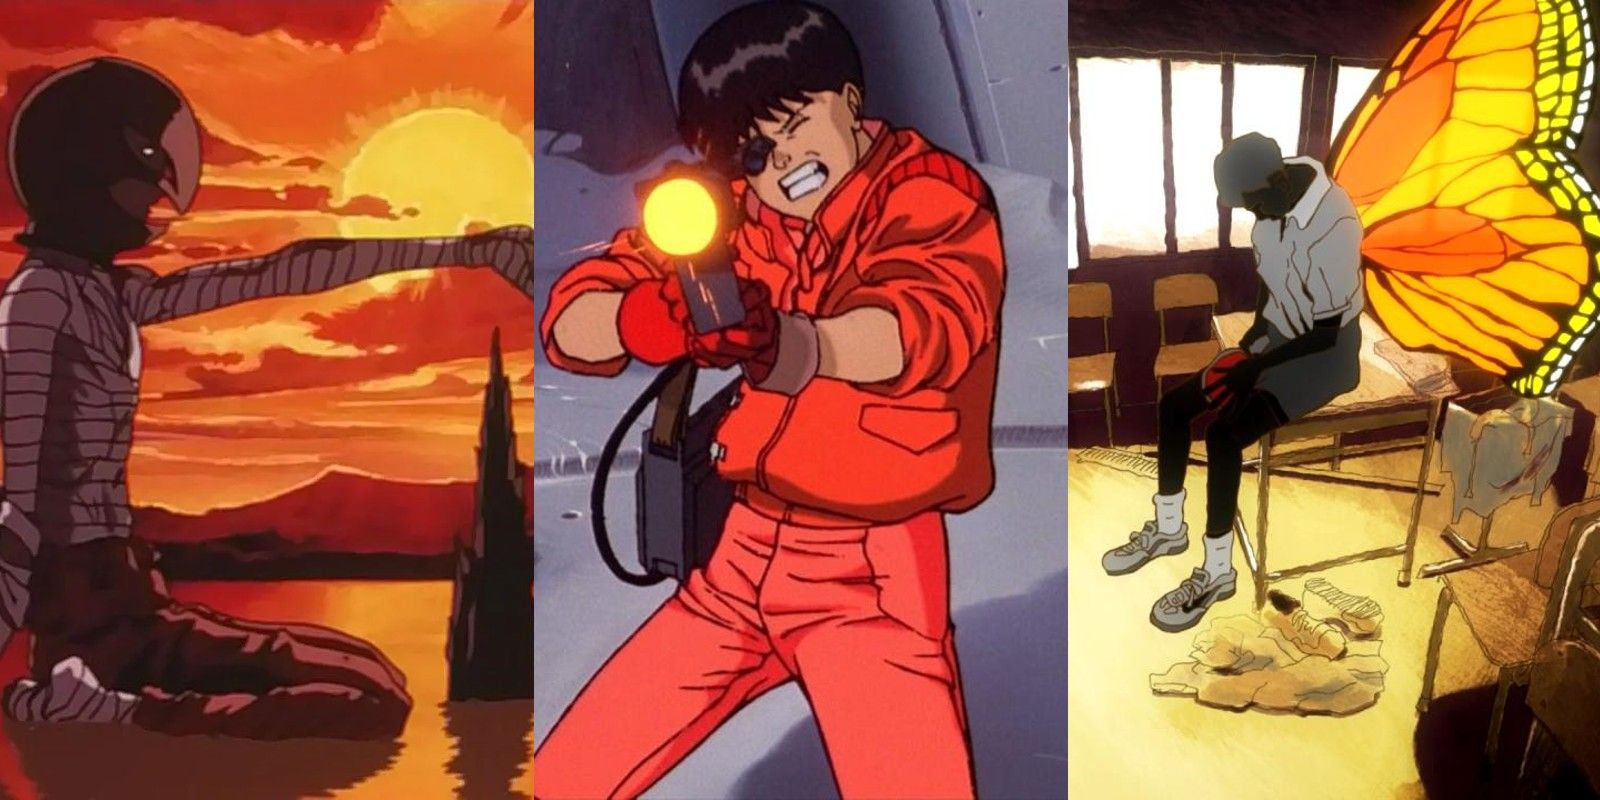 Berserk, Akira, and Ping Pong the Animation